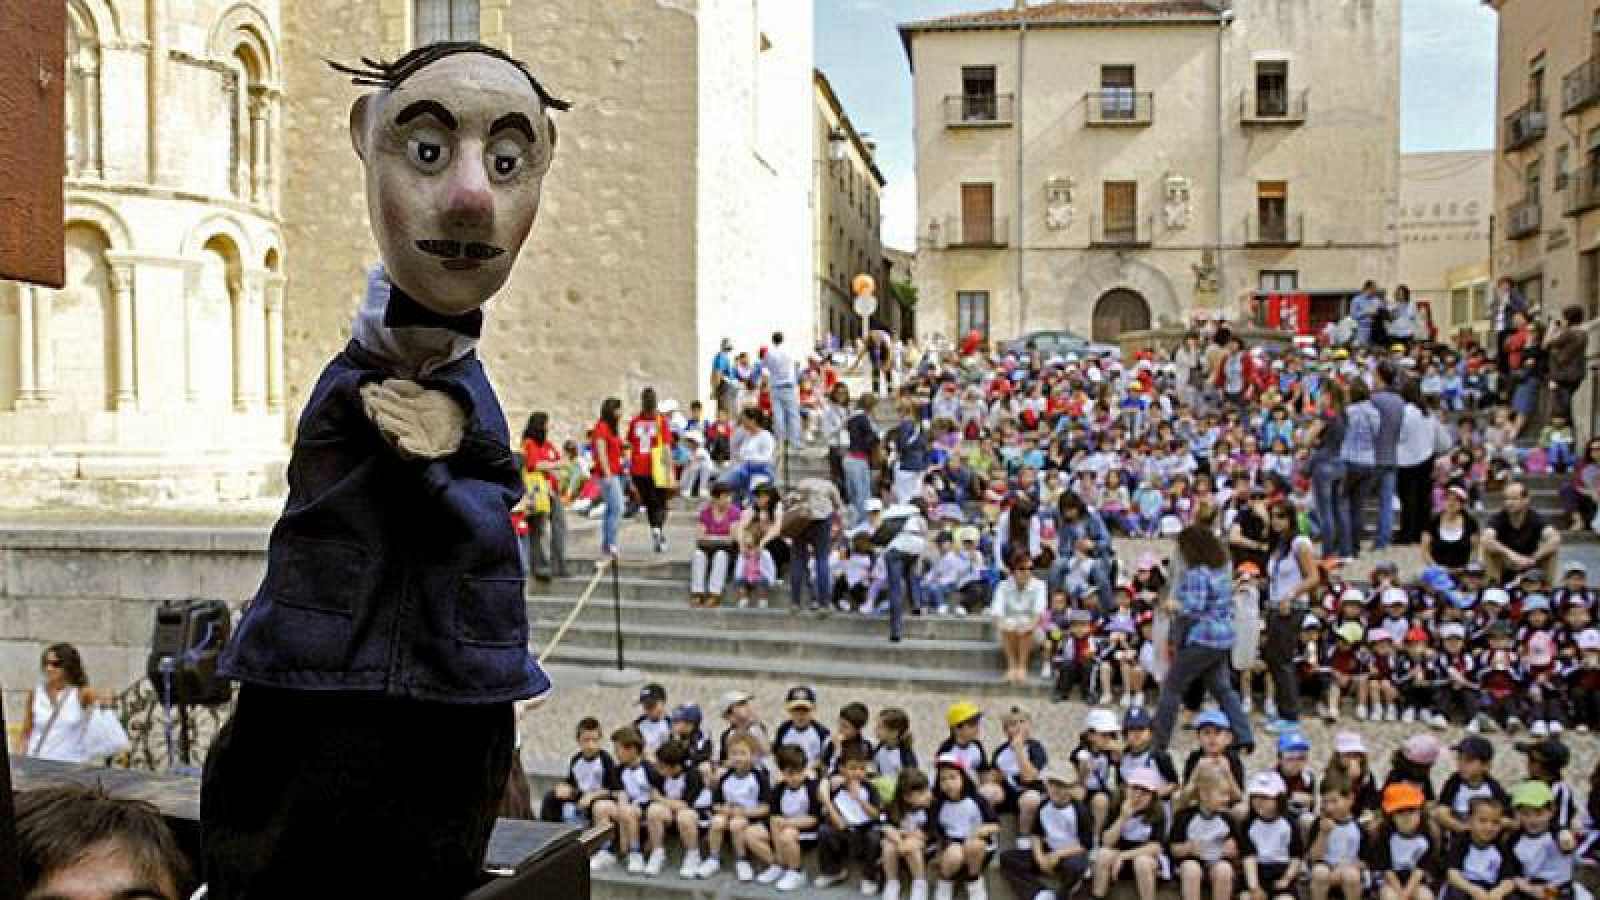 El Festival Internacional de Teatro de Títeres de Segovia.